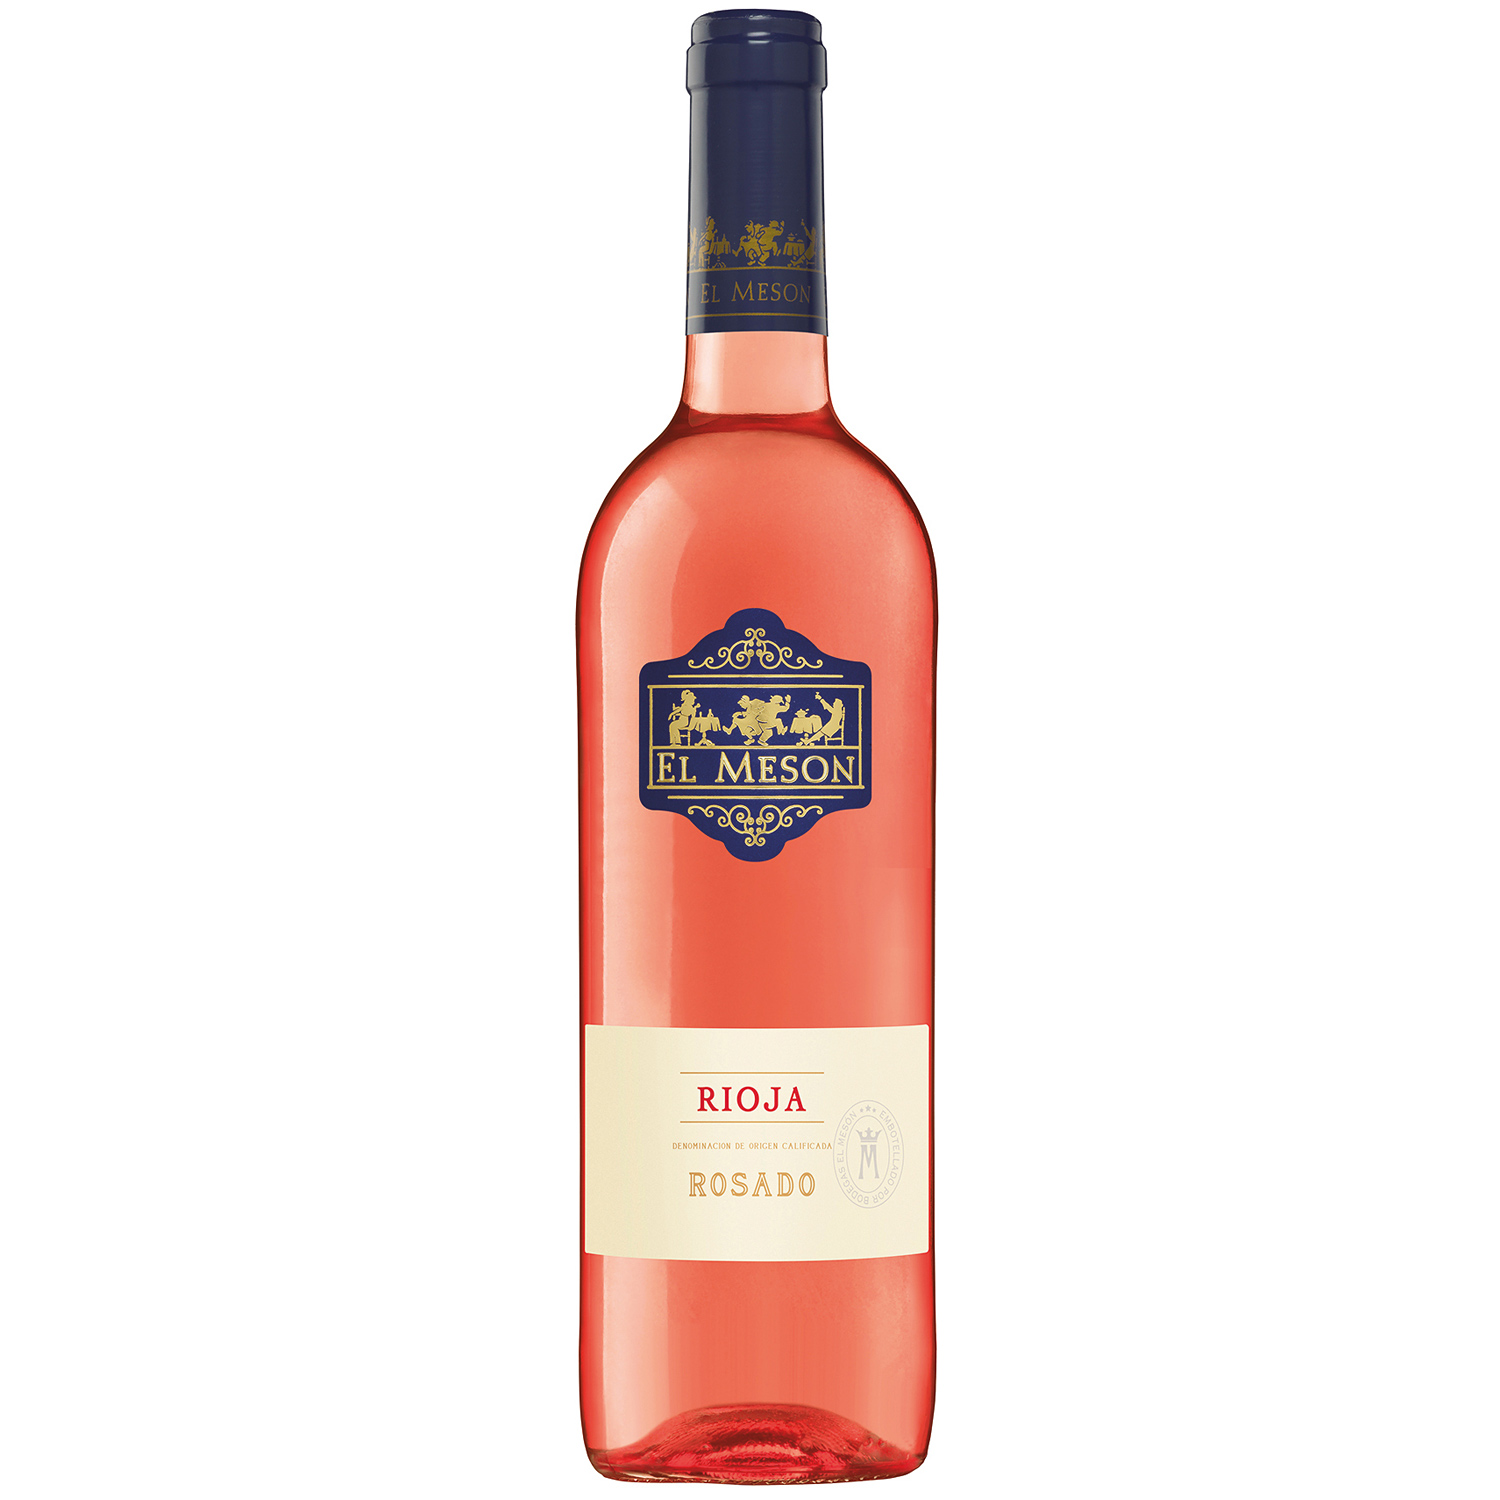 El Meson Rioja Rosado 2021